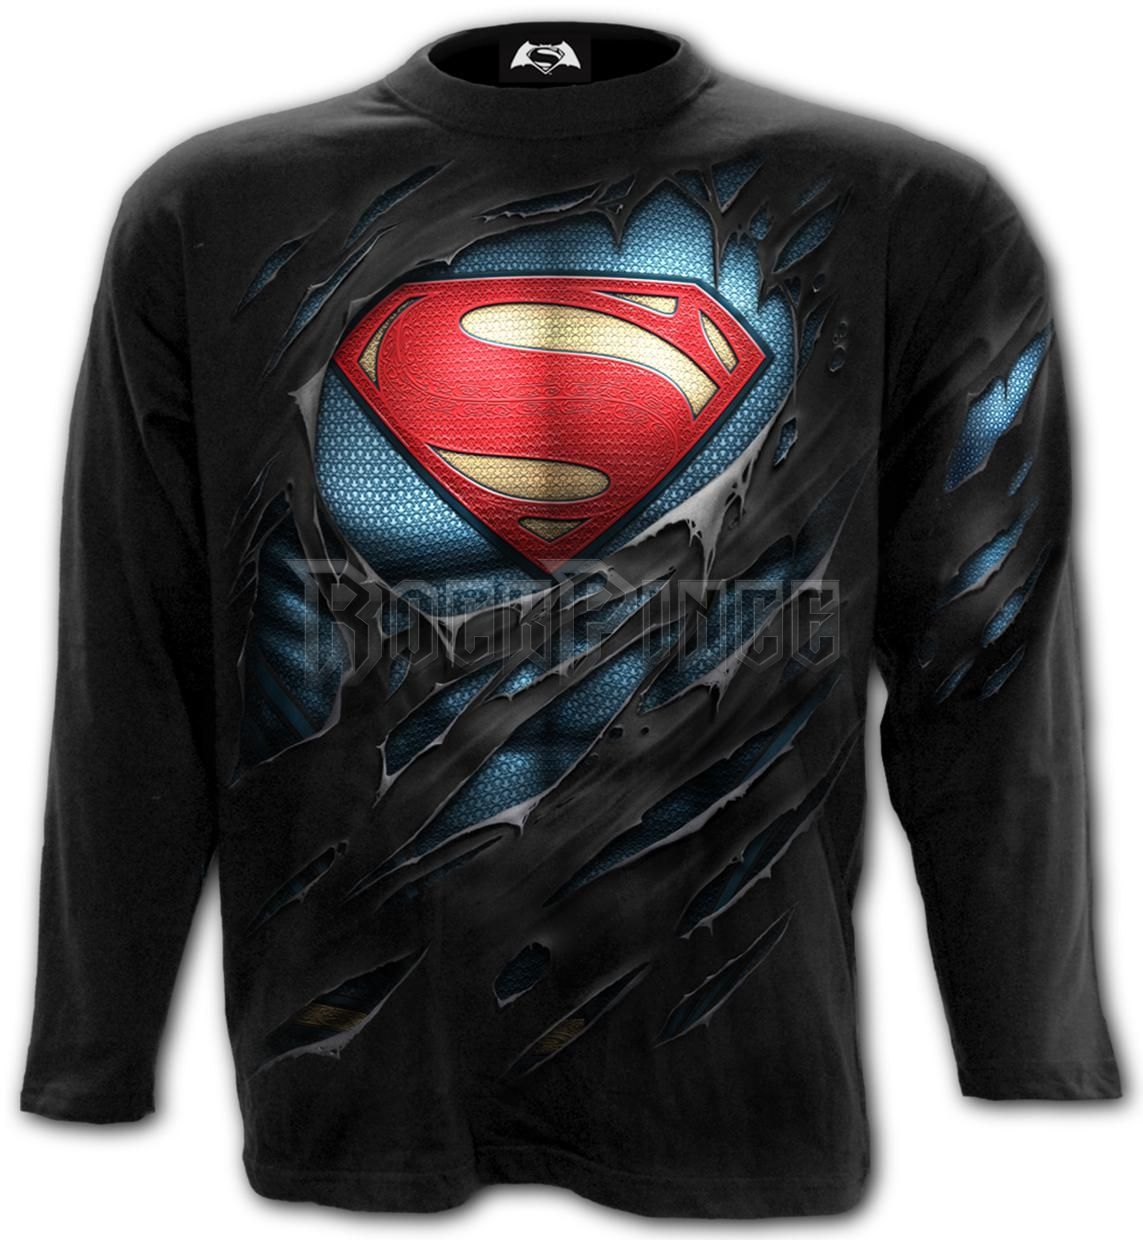 SUPERMAN - RIPPED - Longsleeve T-Shirt Black (Plain) - G407M301